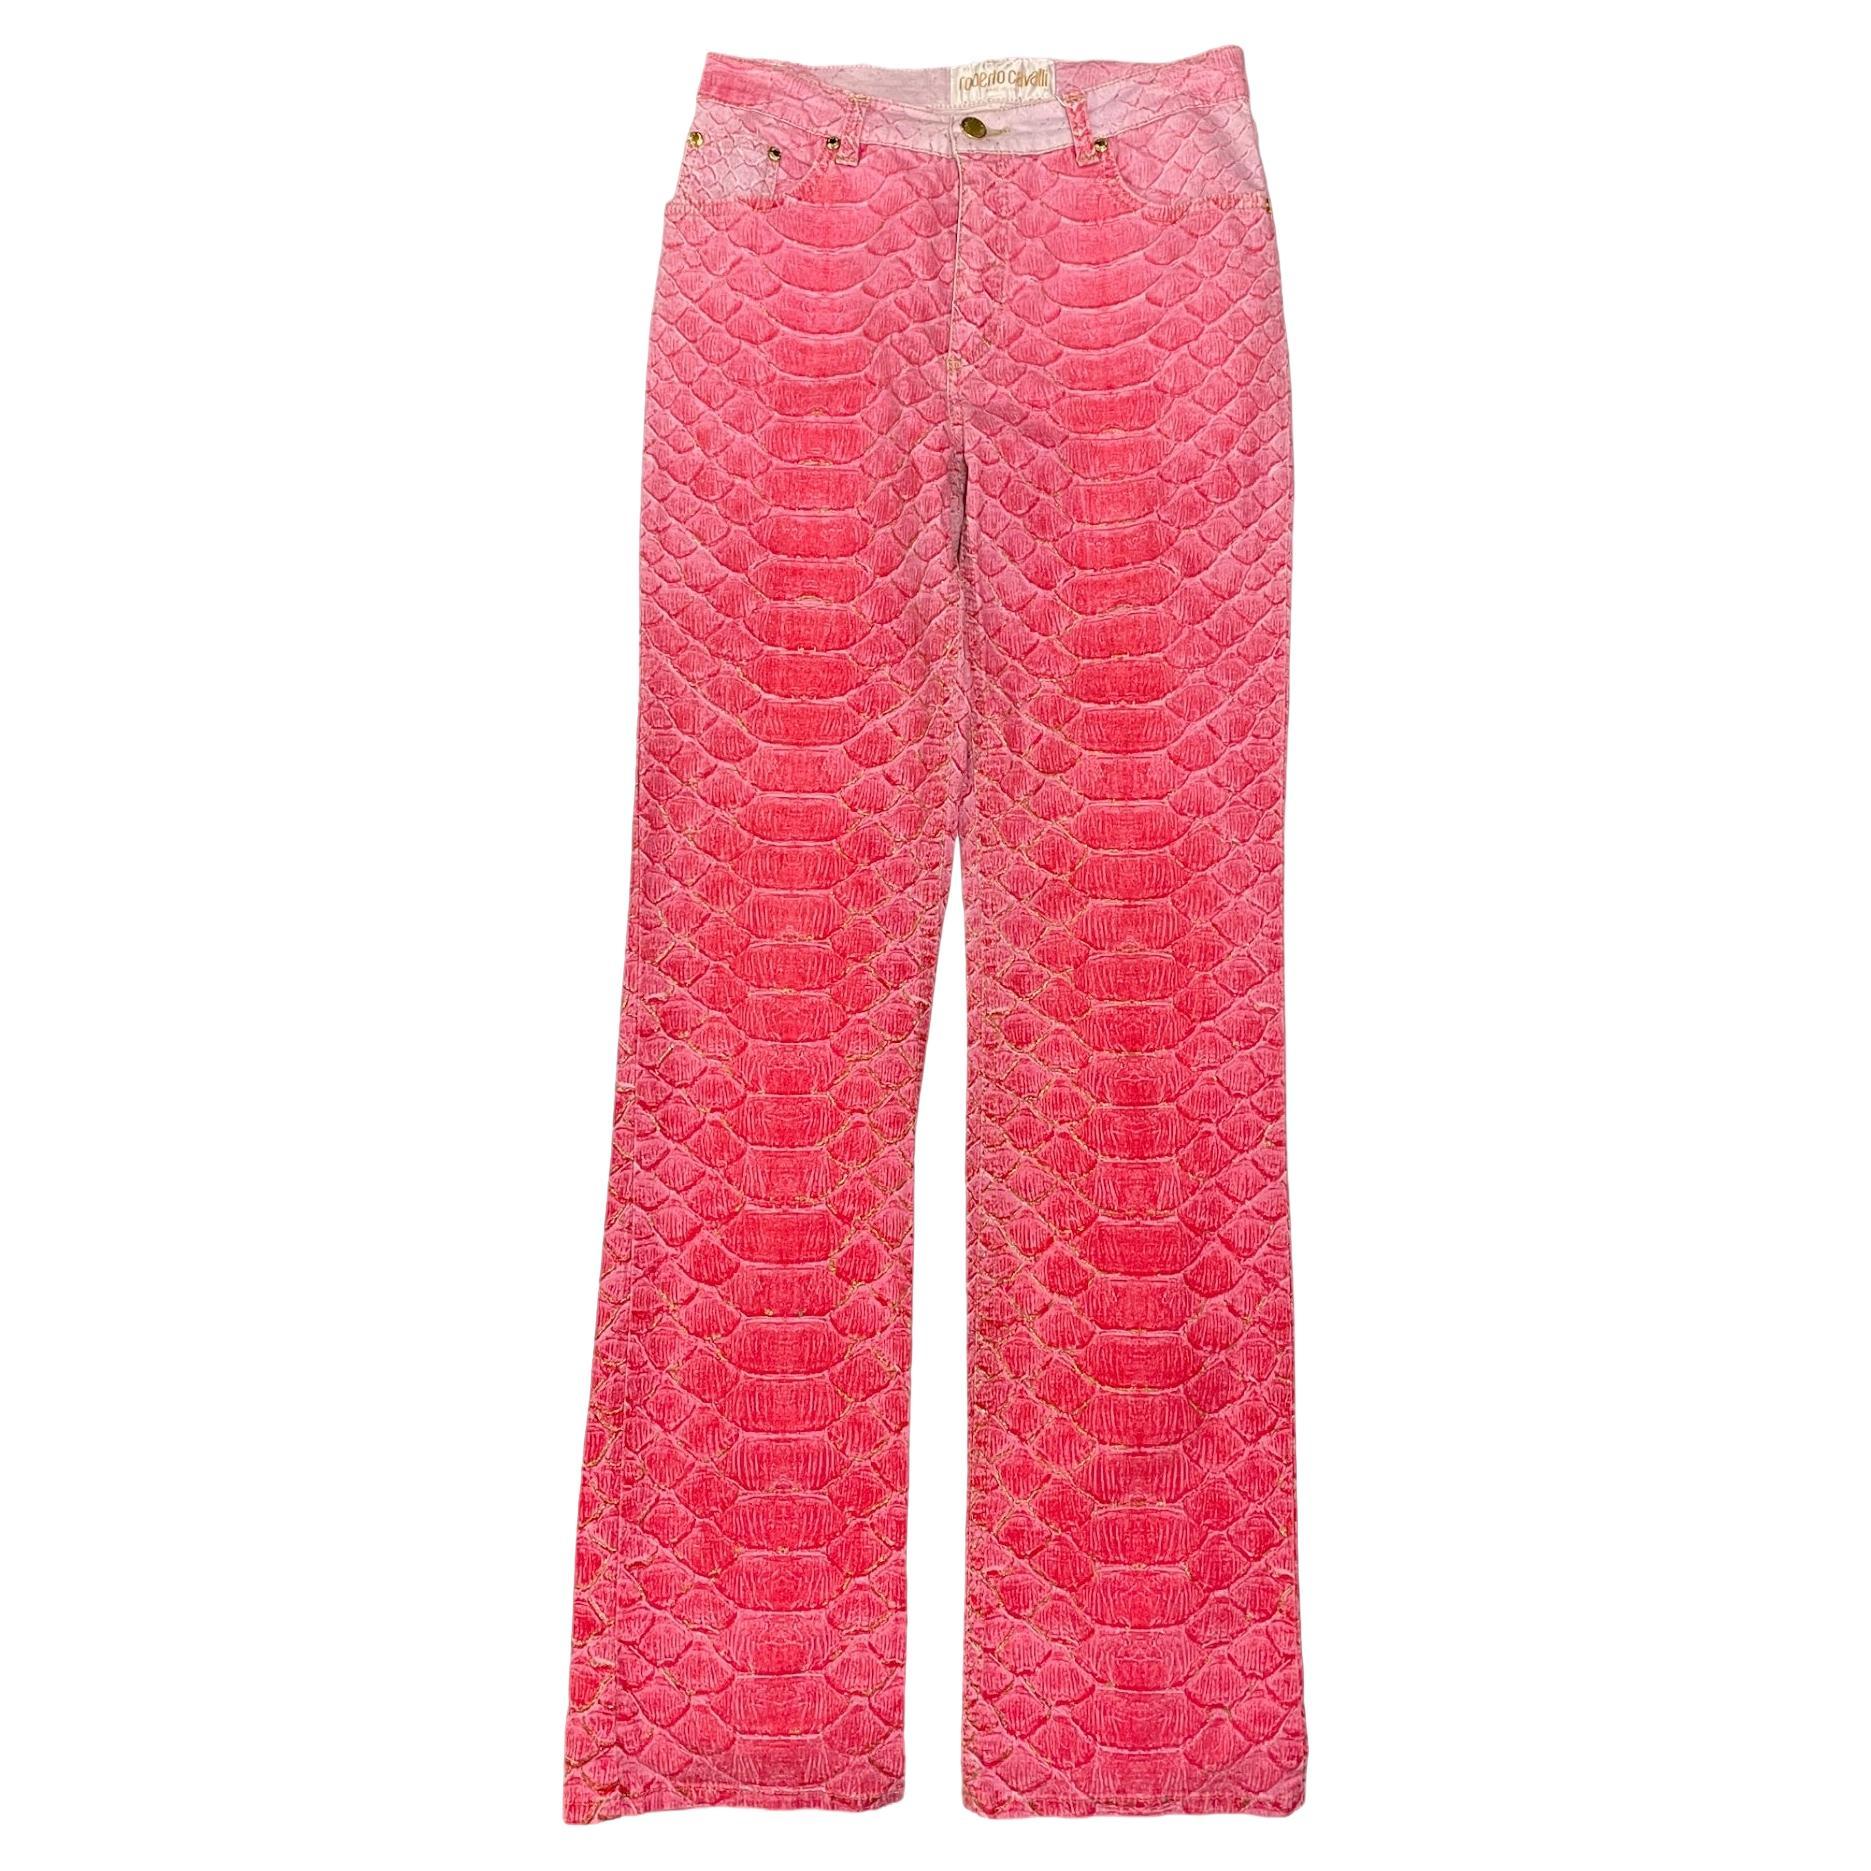 Roberto Cavalli "Pink Phyton" Jeans S/S 1999